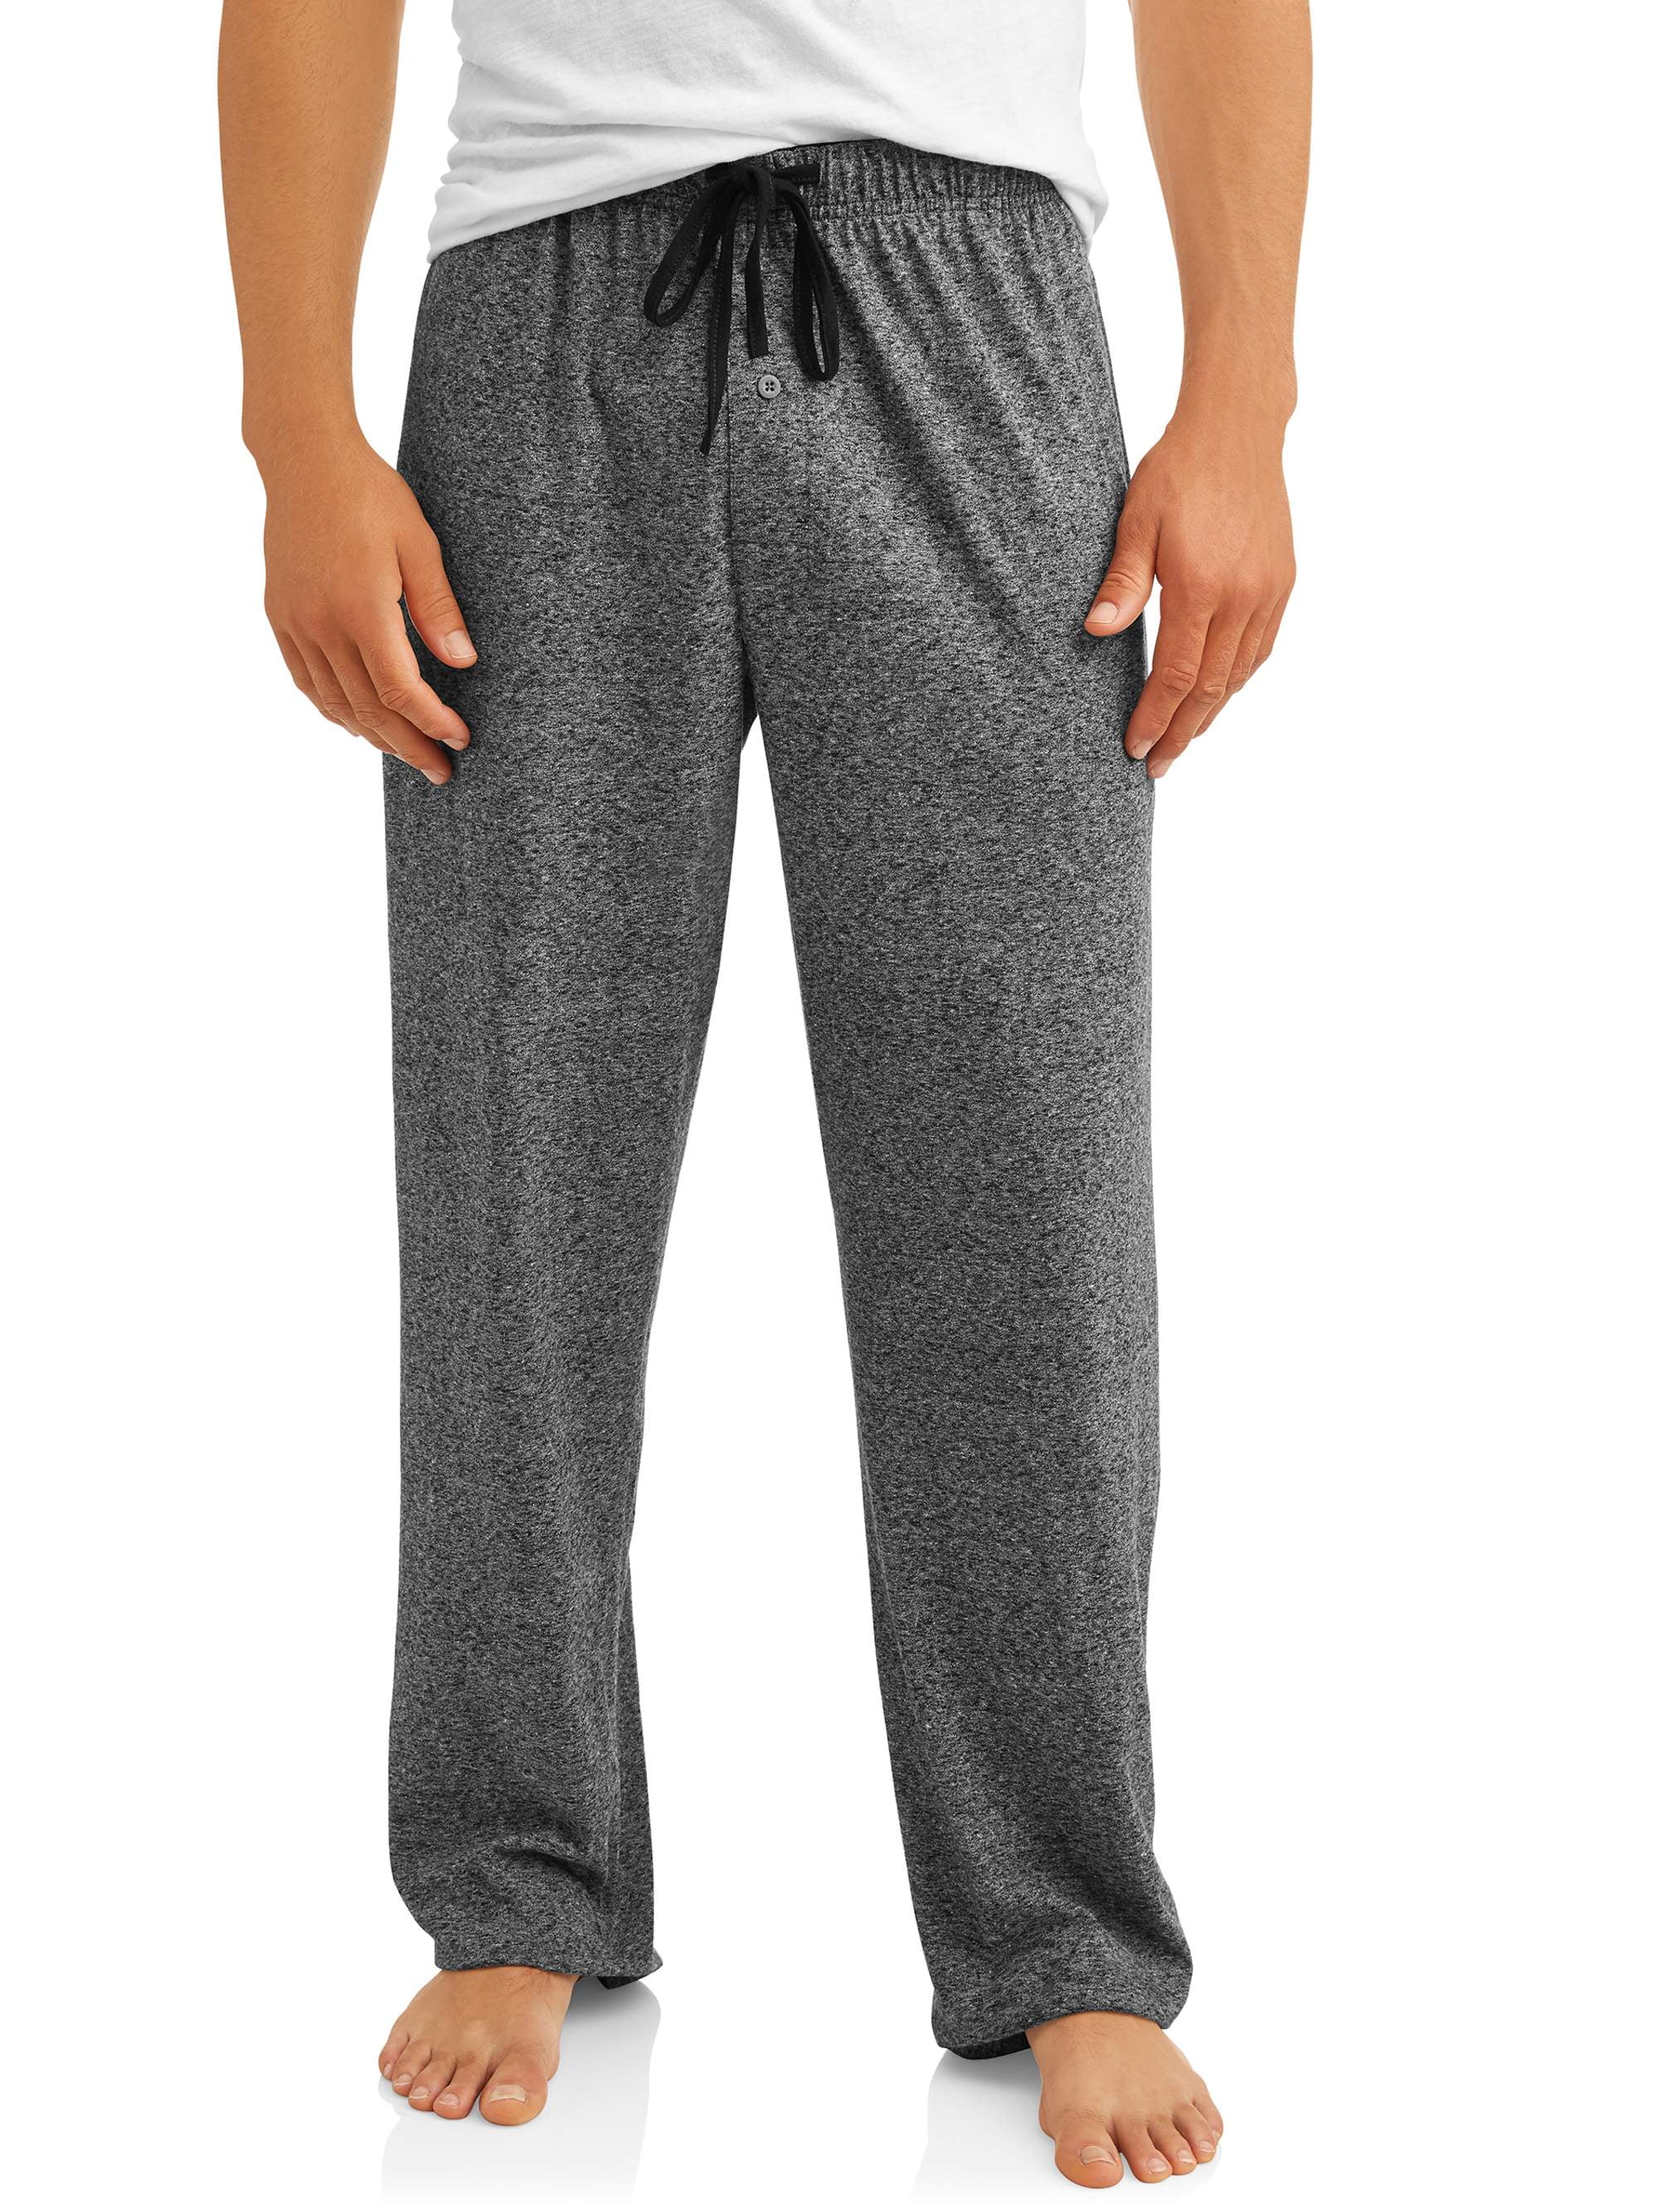 Hanes Elastic Waistband Pockets Solid Sleep Pants Pajamas (Men's or Men's  Big & Tall) 1 Pack 